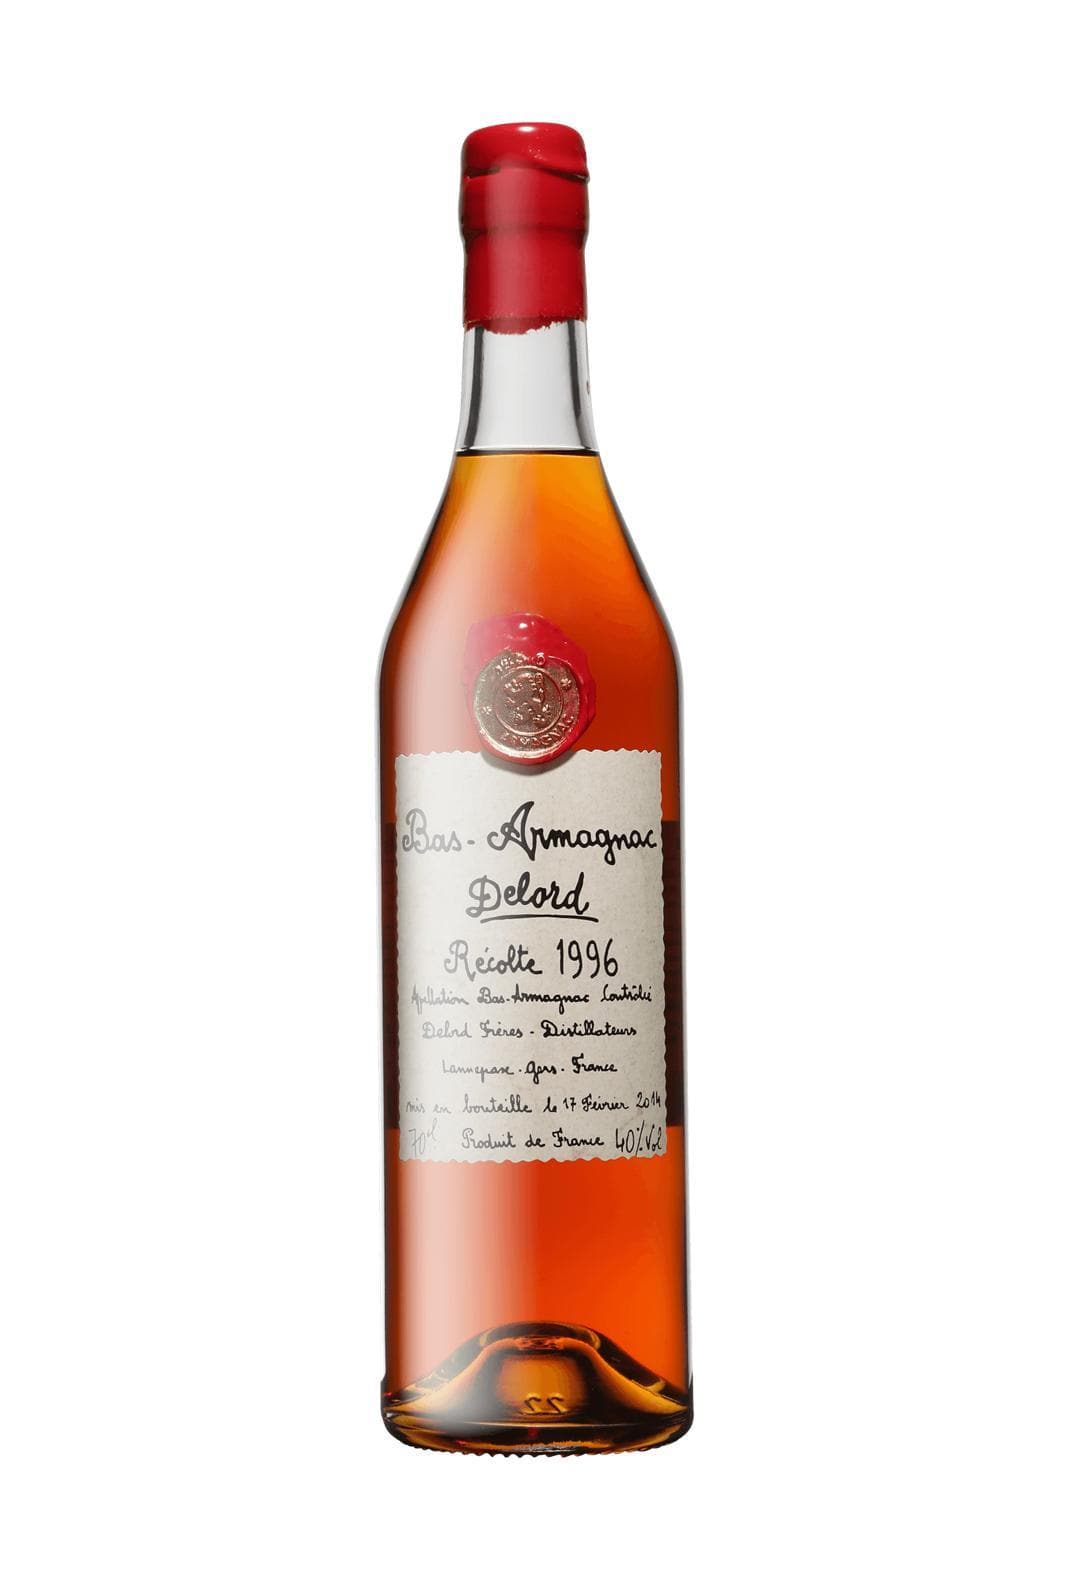 Delord 1996 Bas Armagnac 40% 700ml | Brandy | Shop online at Spirits of France